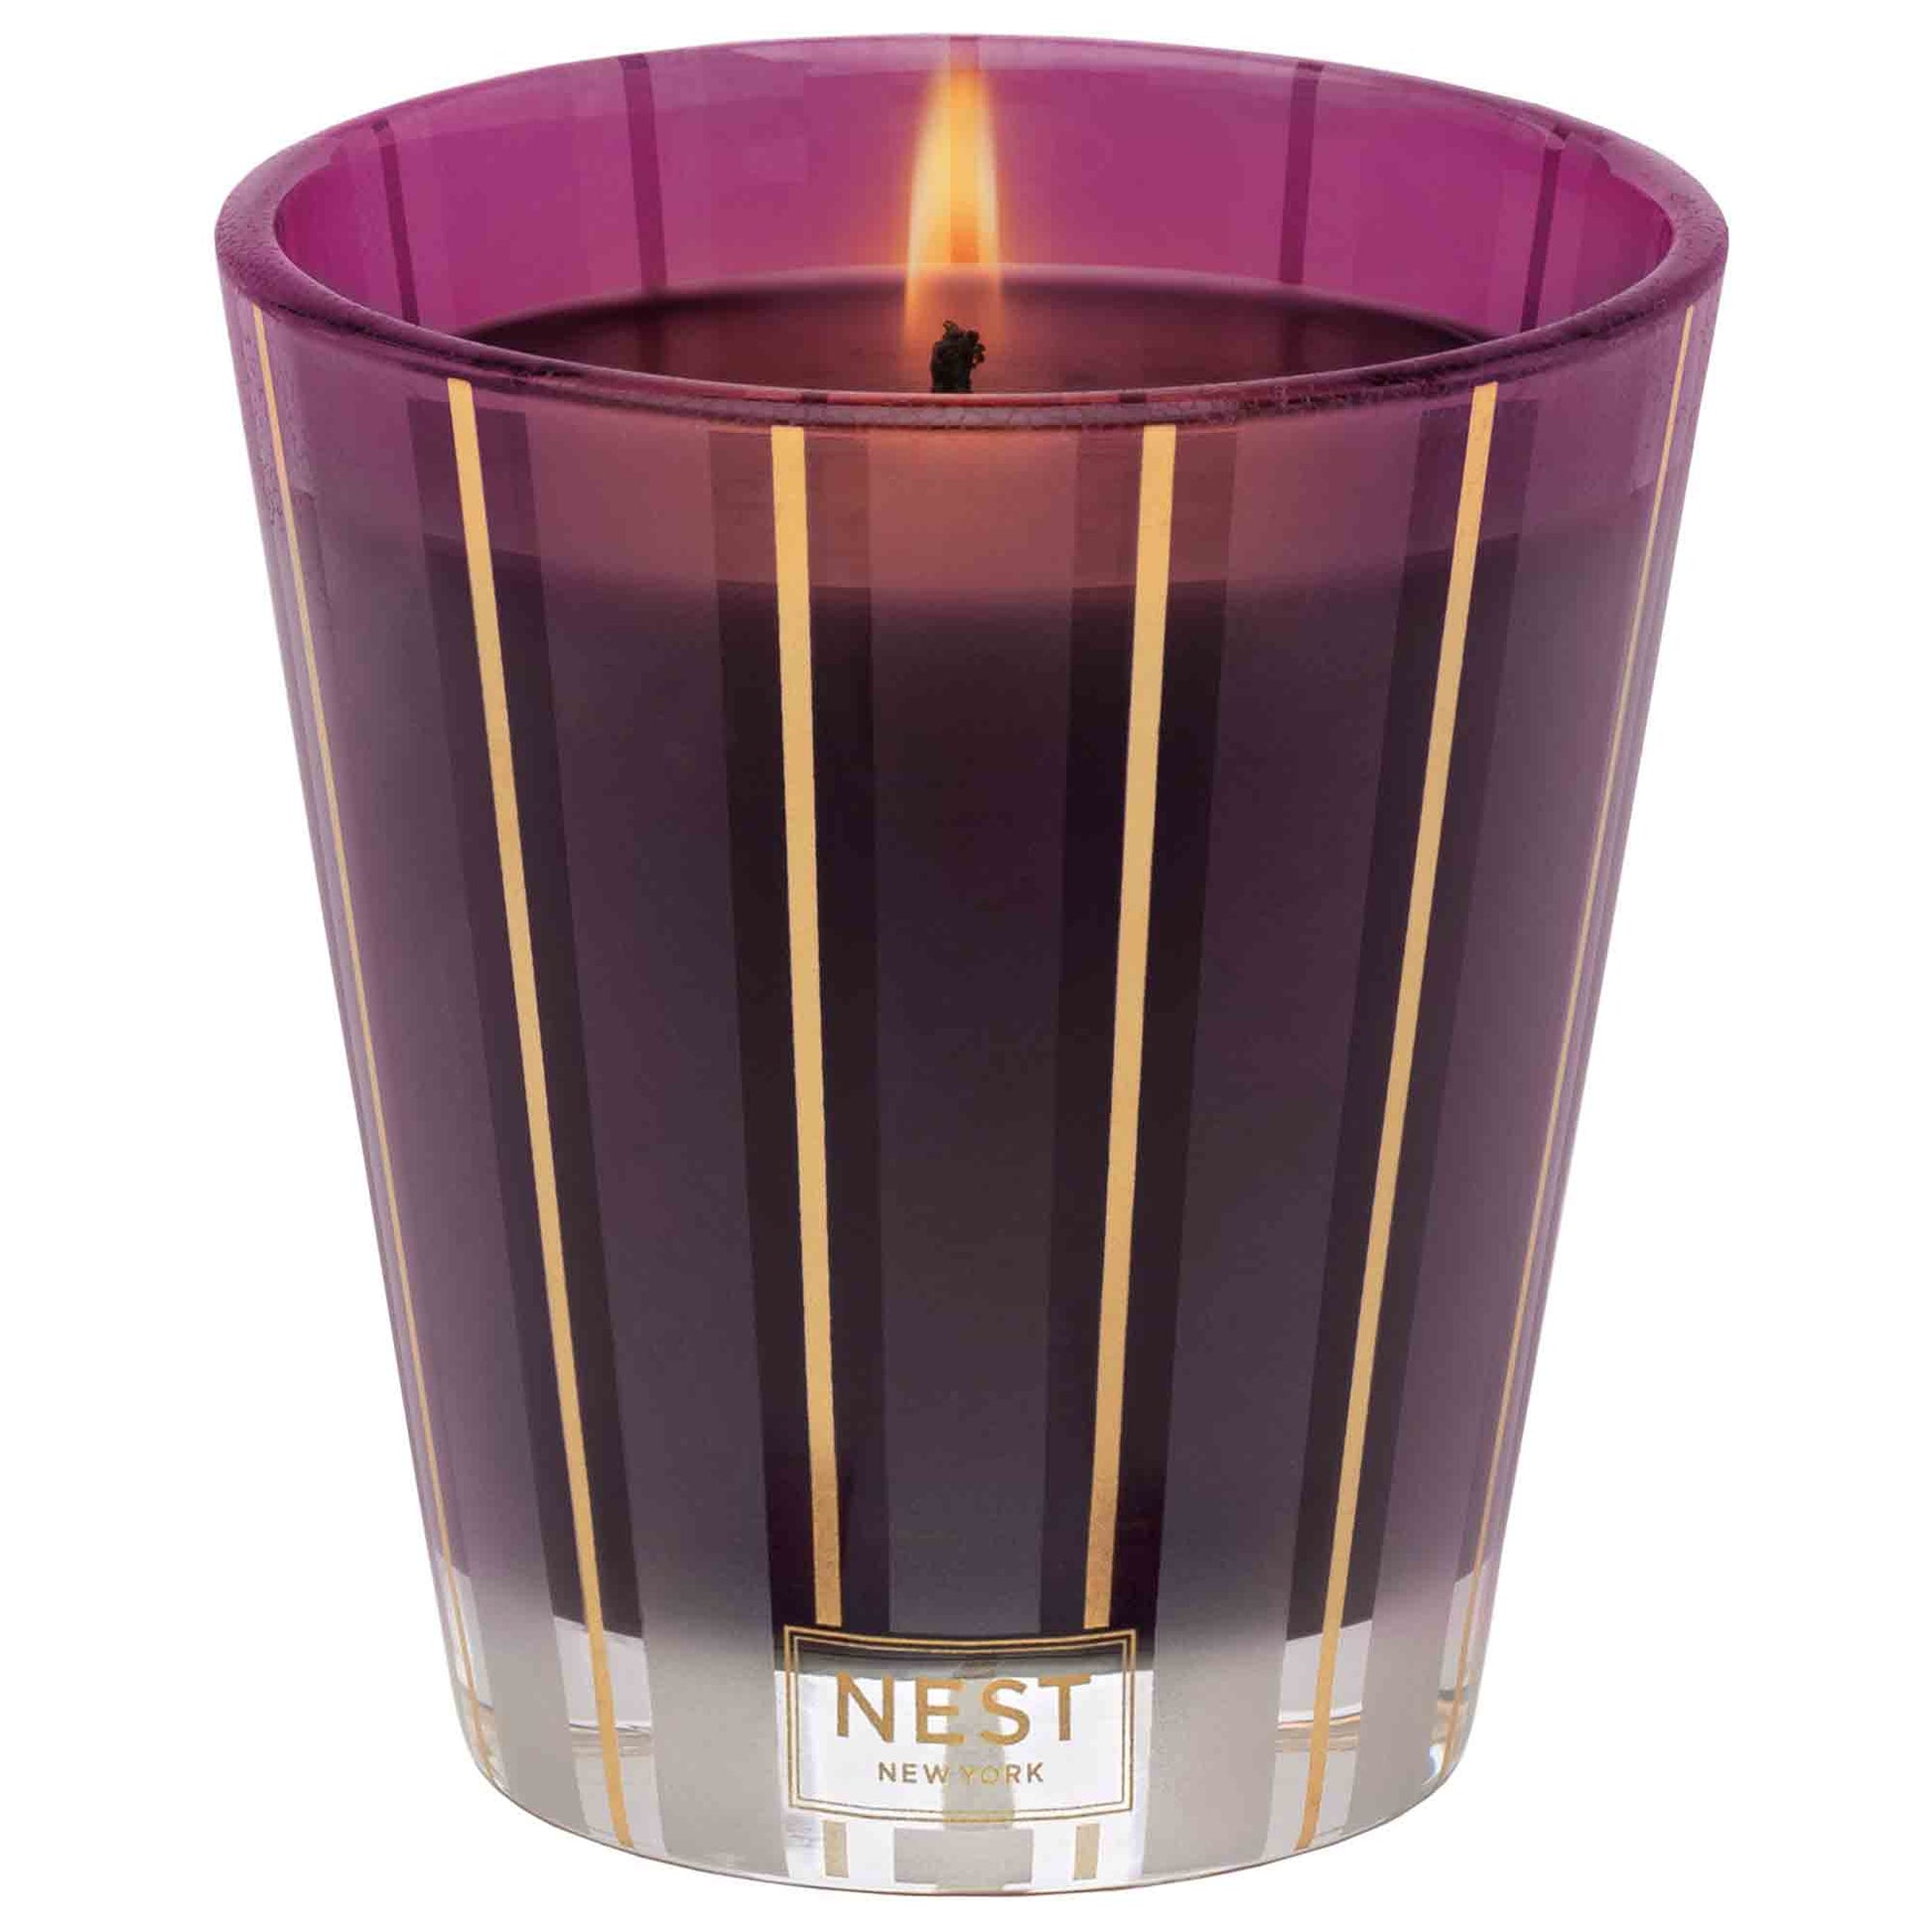 NEST New York - Autumn Plum Candle - Tarvos Boutique